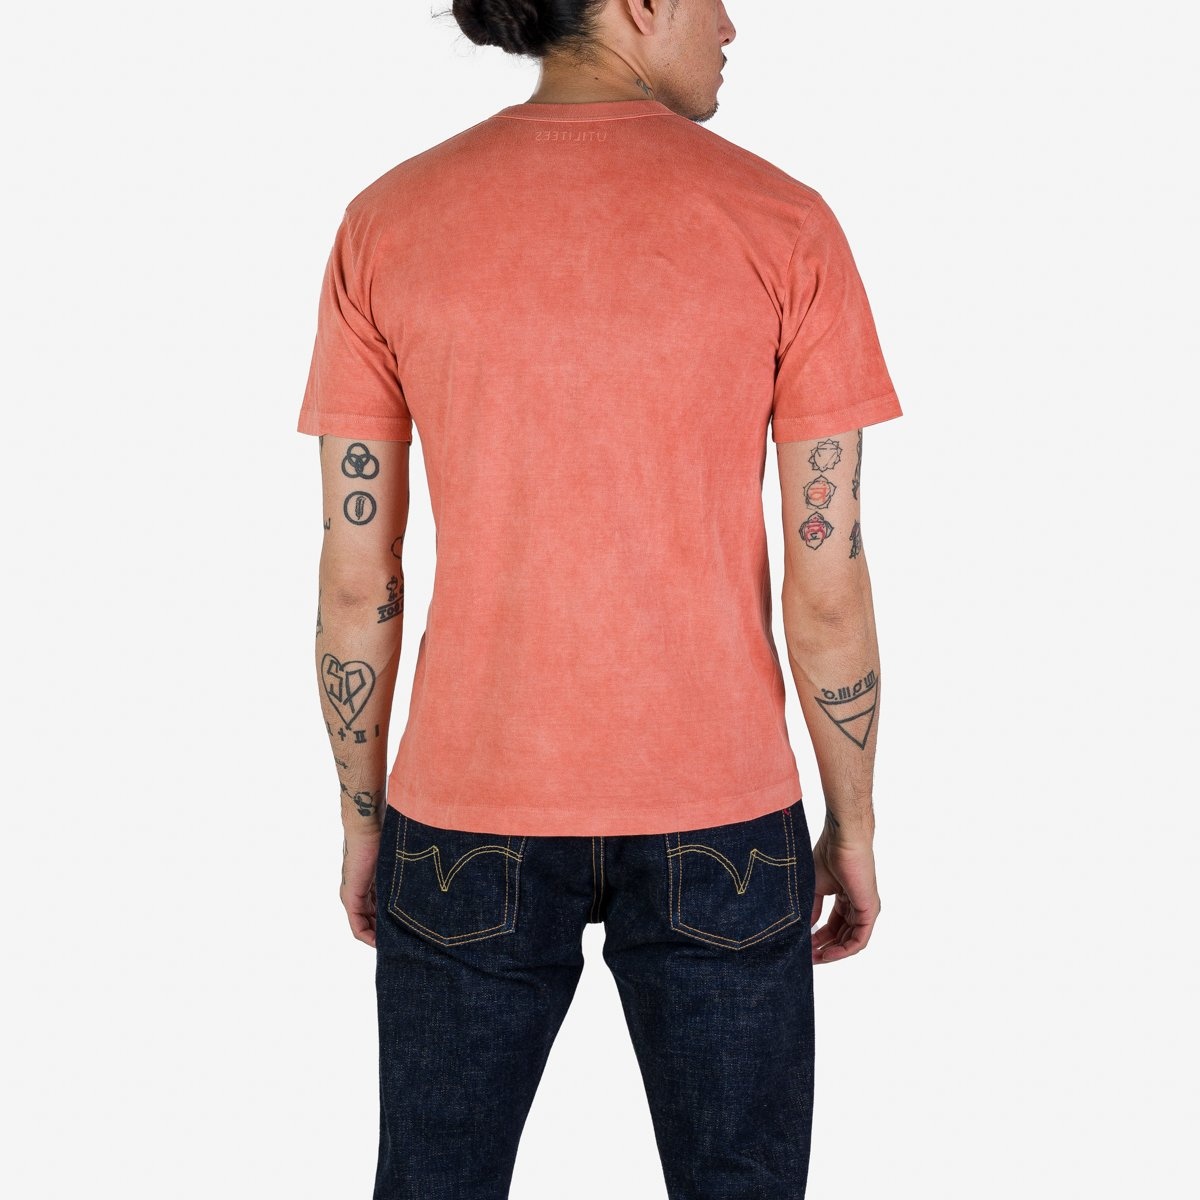 UTIL-HDYE-COR UTILITEES - 5.5oz Loopwheel Crew Neck T-Shirt - Hand Dyed Coral Pink - 3